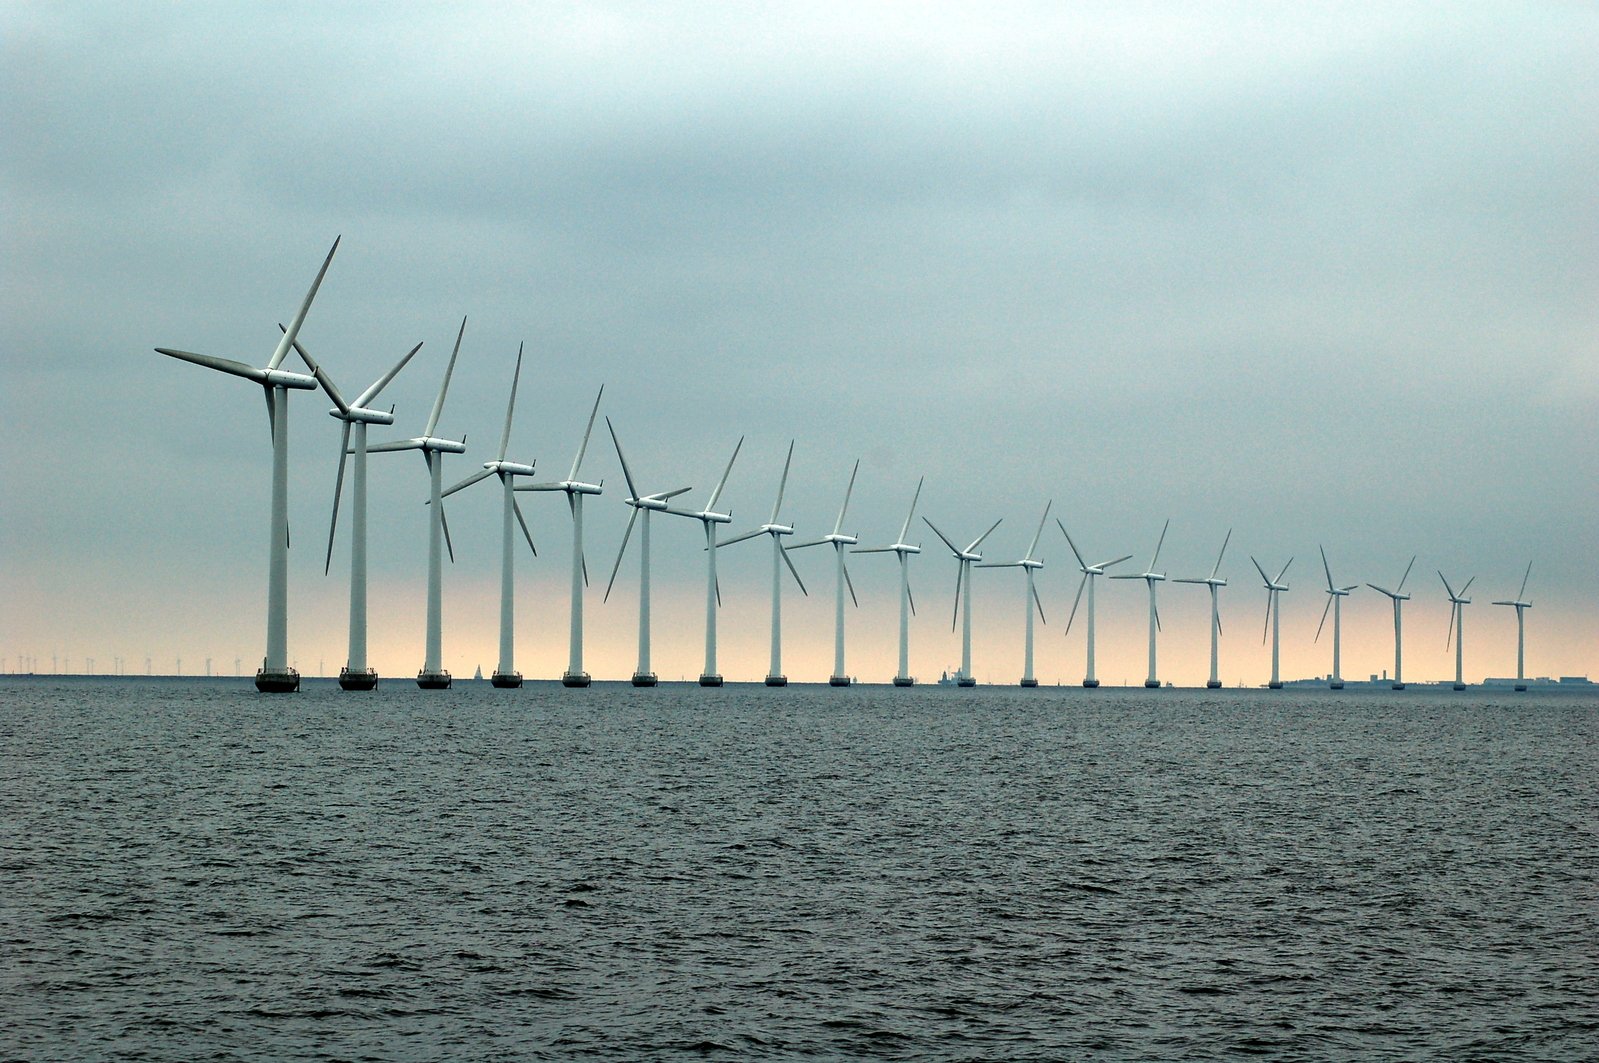 wind farm on the ocean with multiple windmills